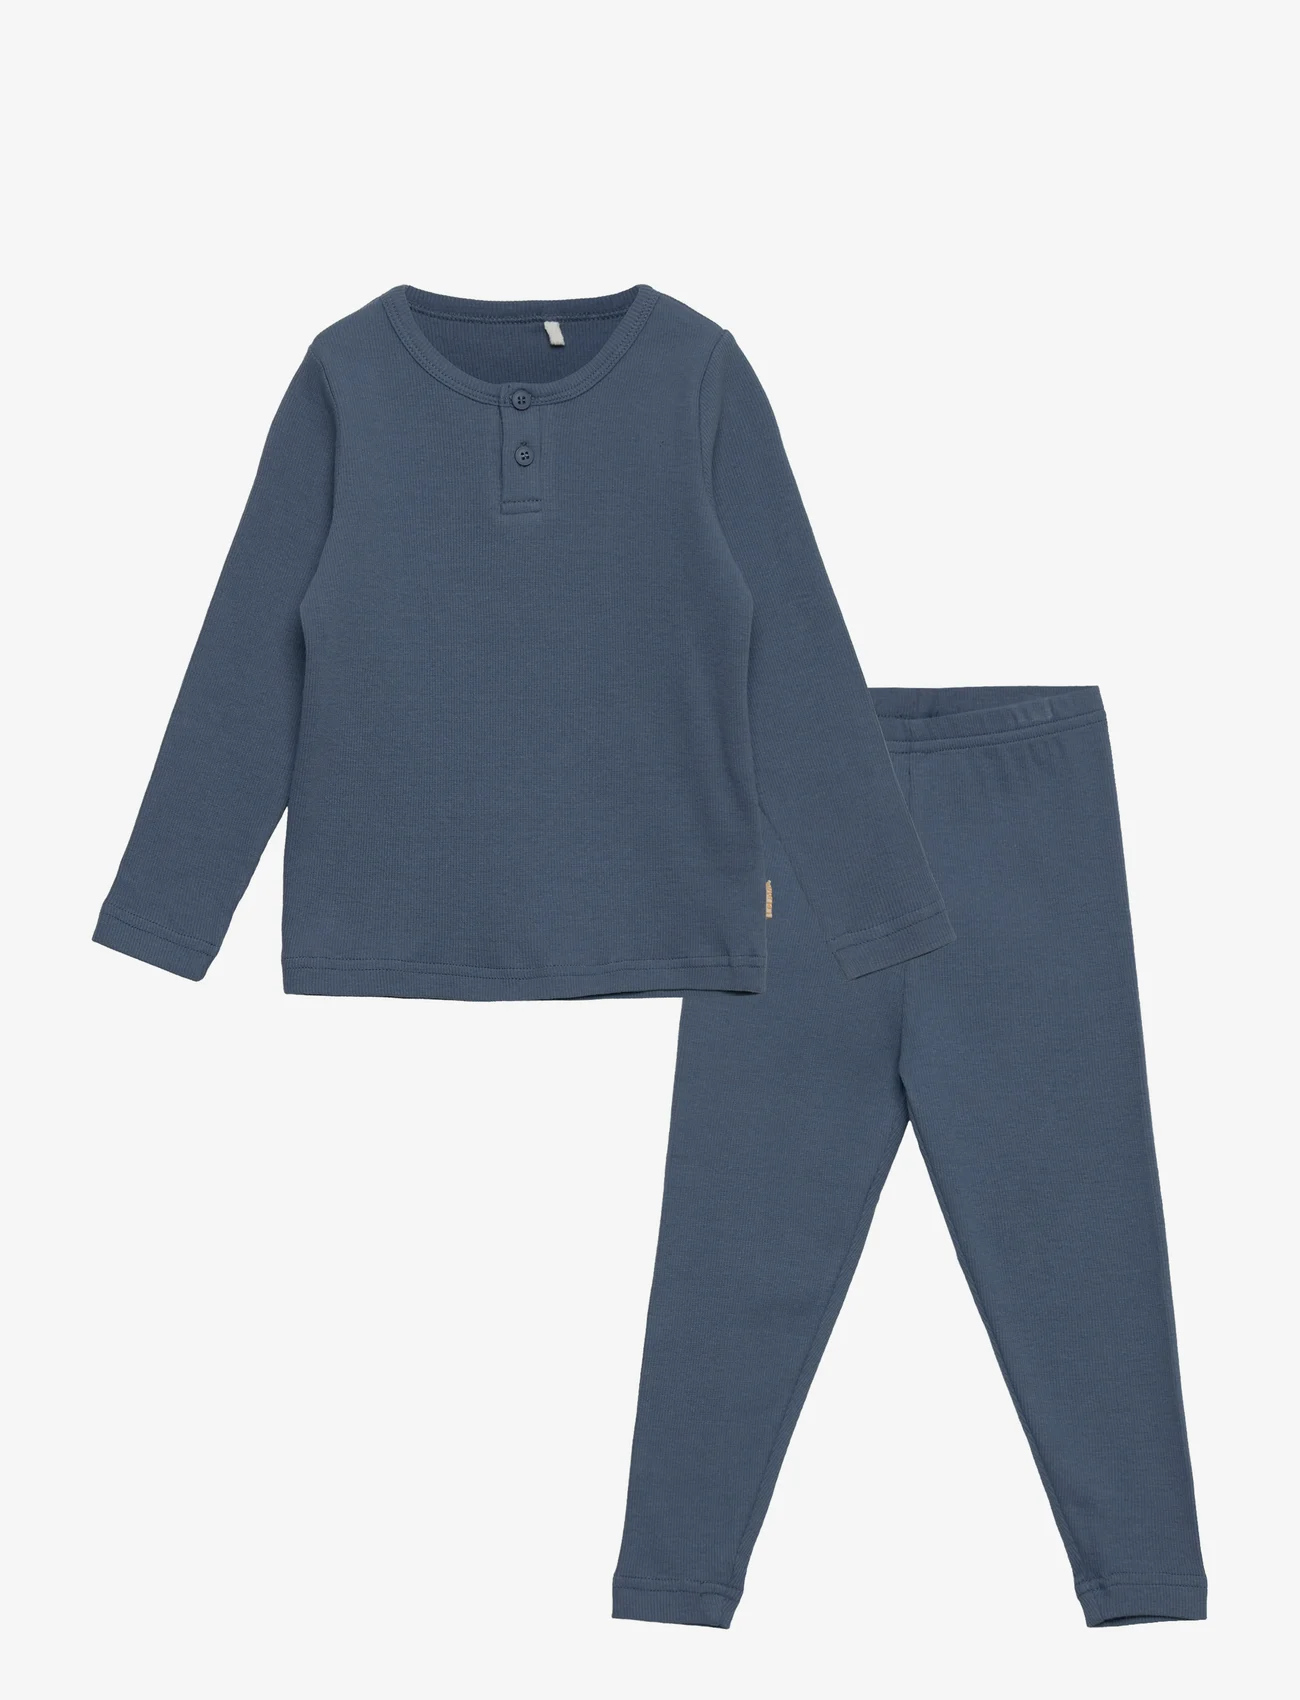 CeLaVi - Pyjamas set - Boy - sets - blue fushion - 0